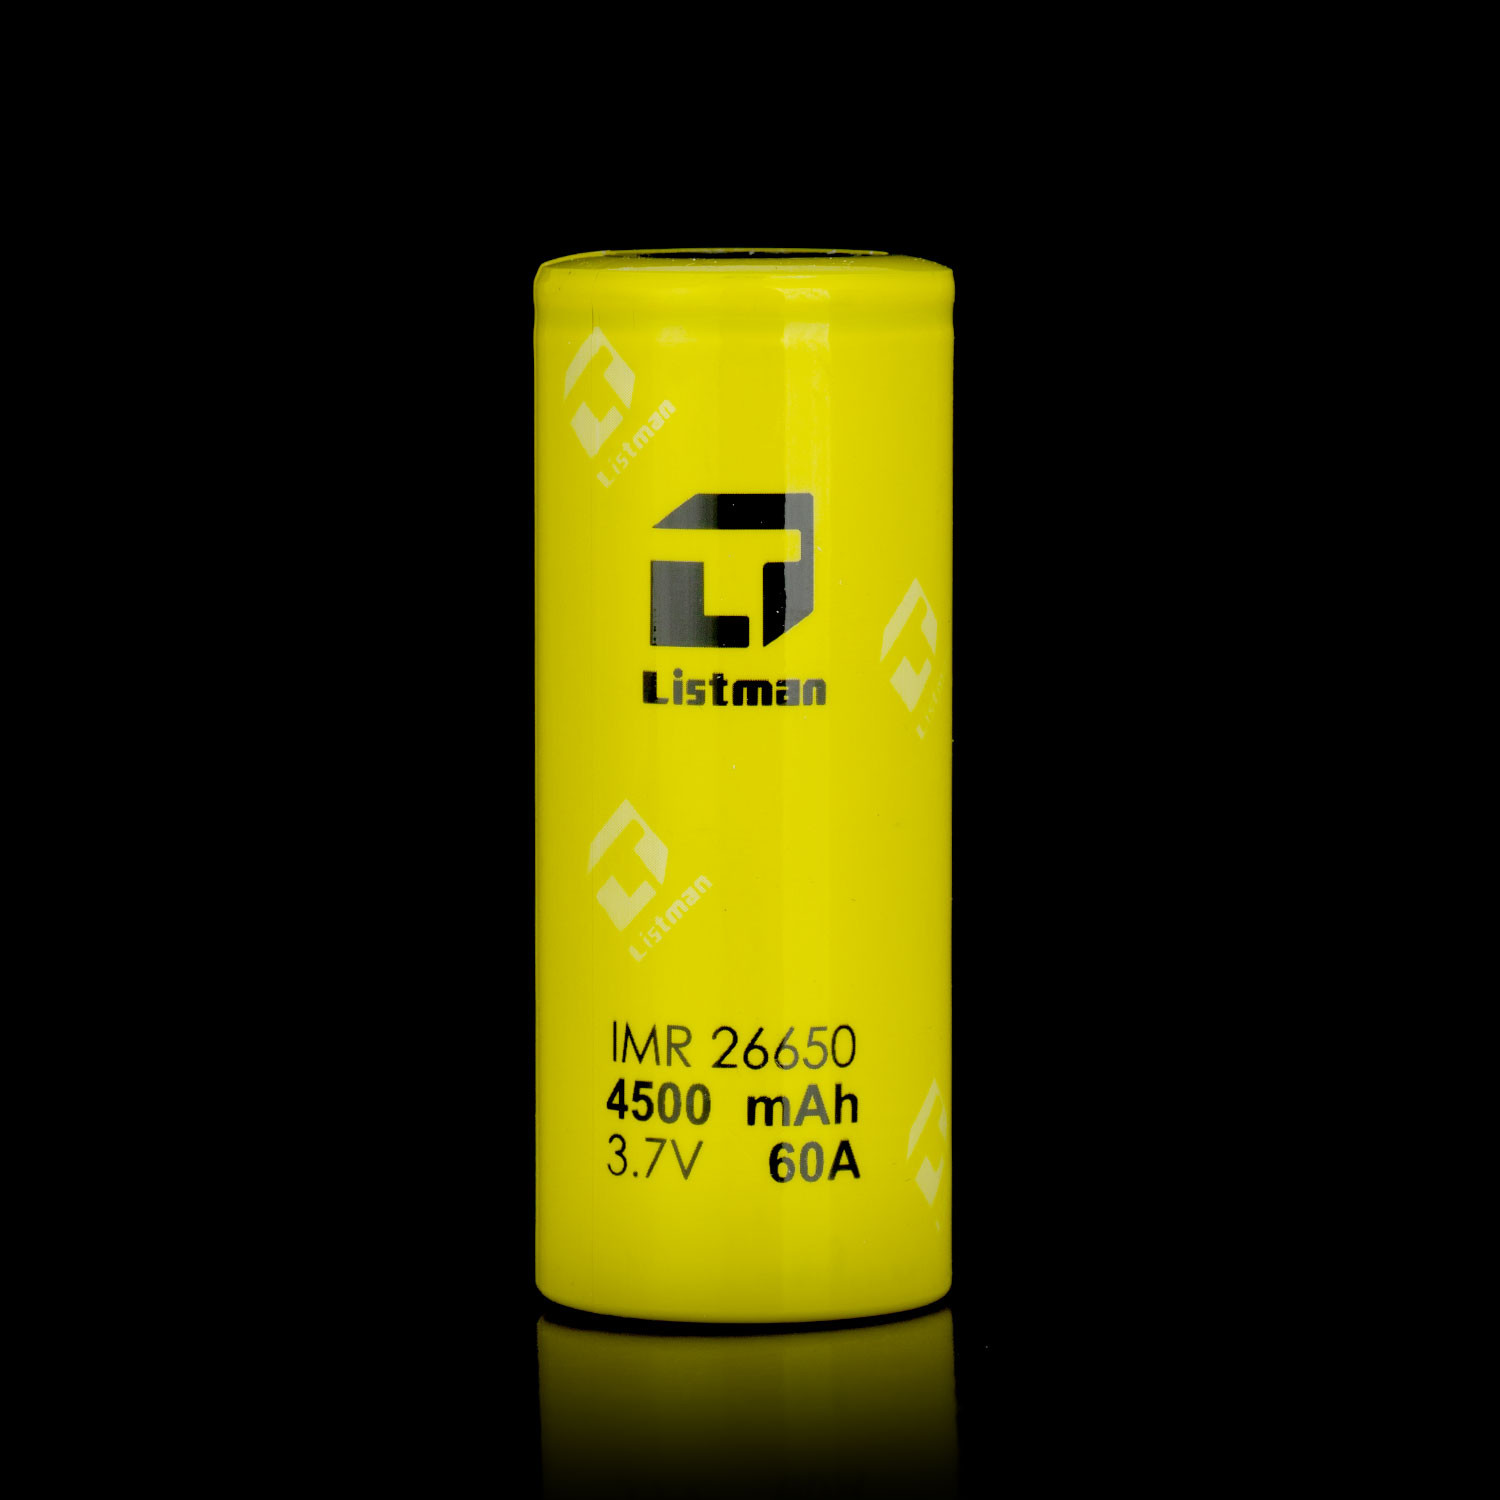 Listman 26650 4500mAh 60A Battery